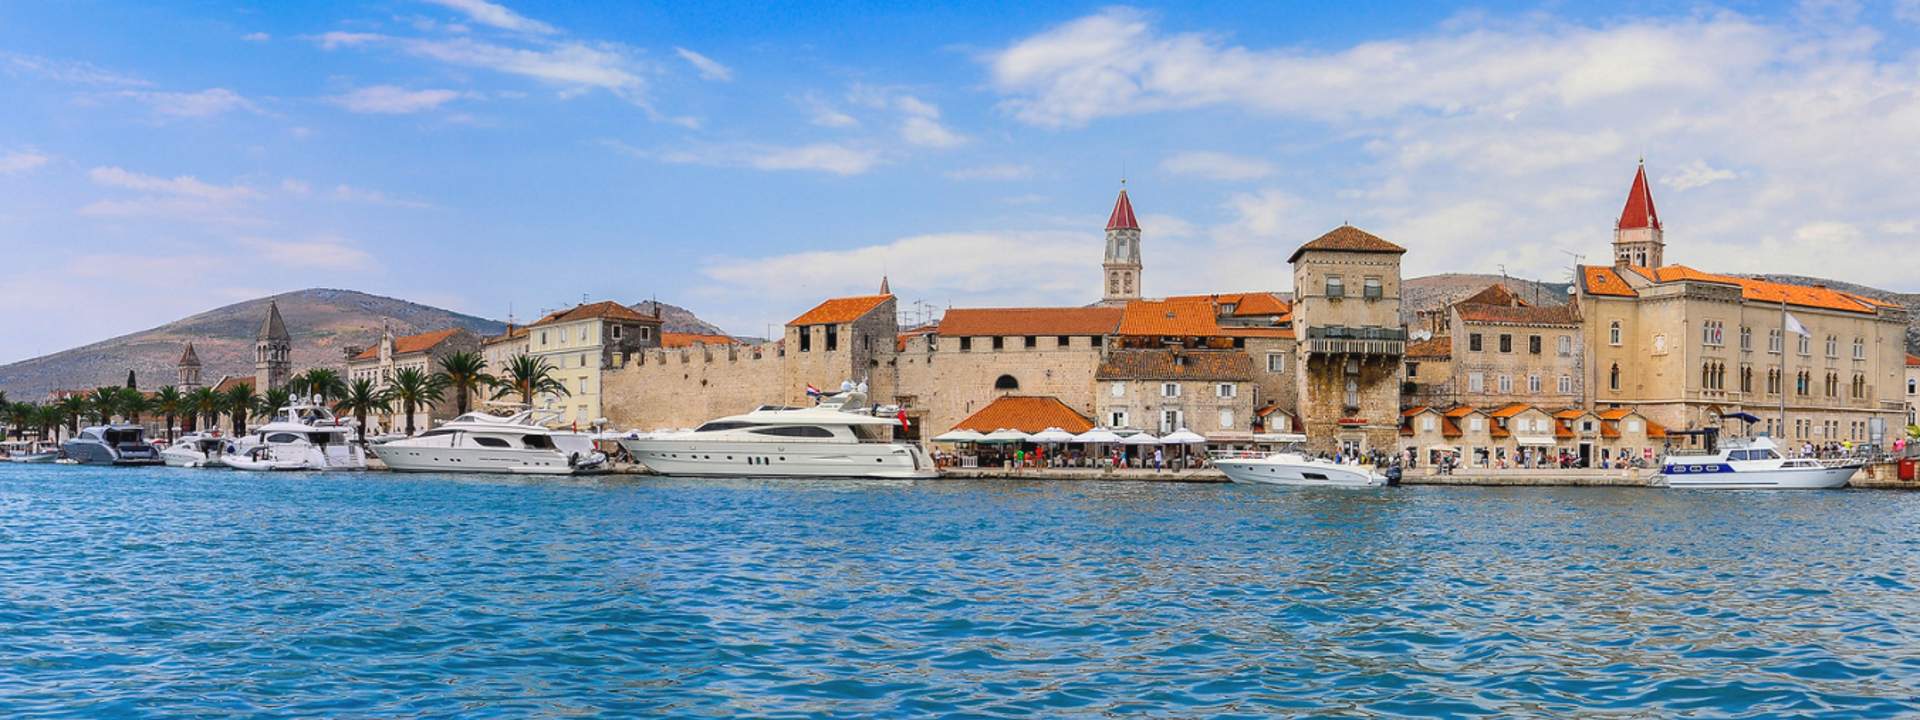 Cabin Cruise around the islands of Croatia